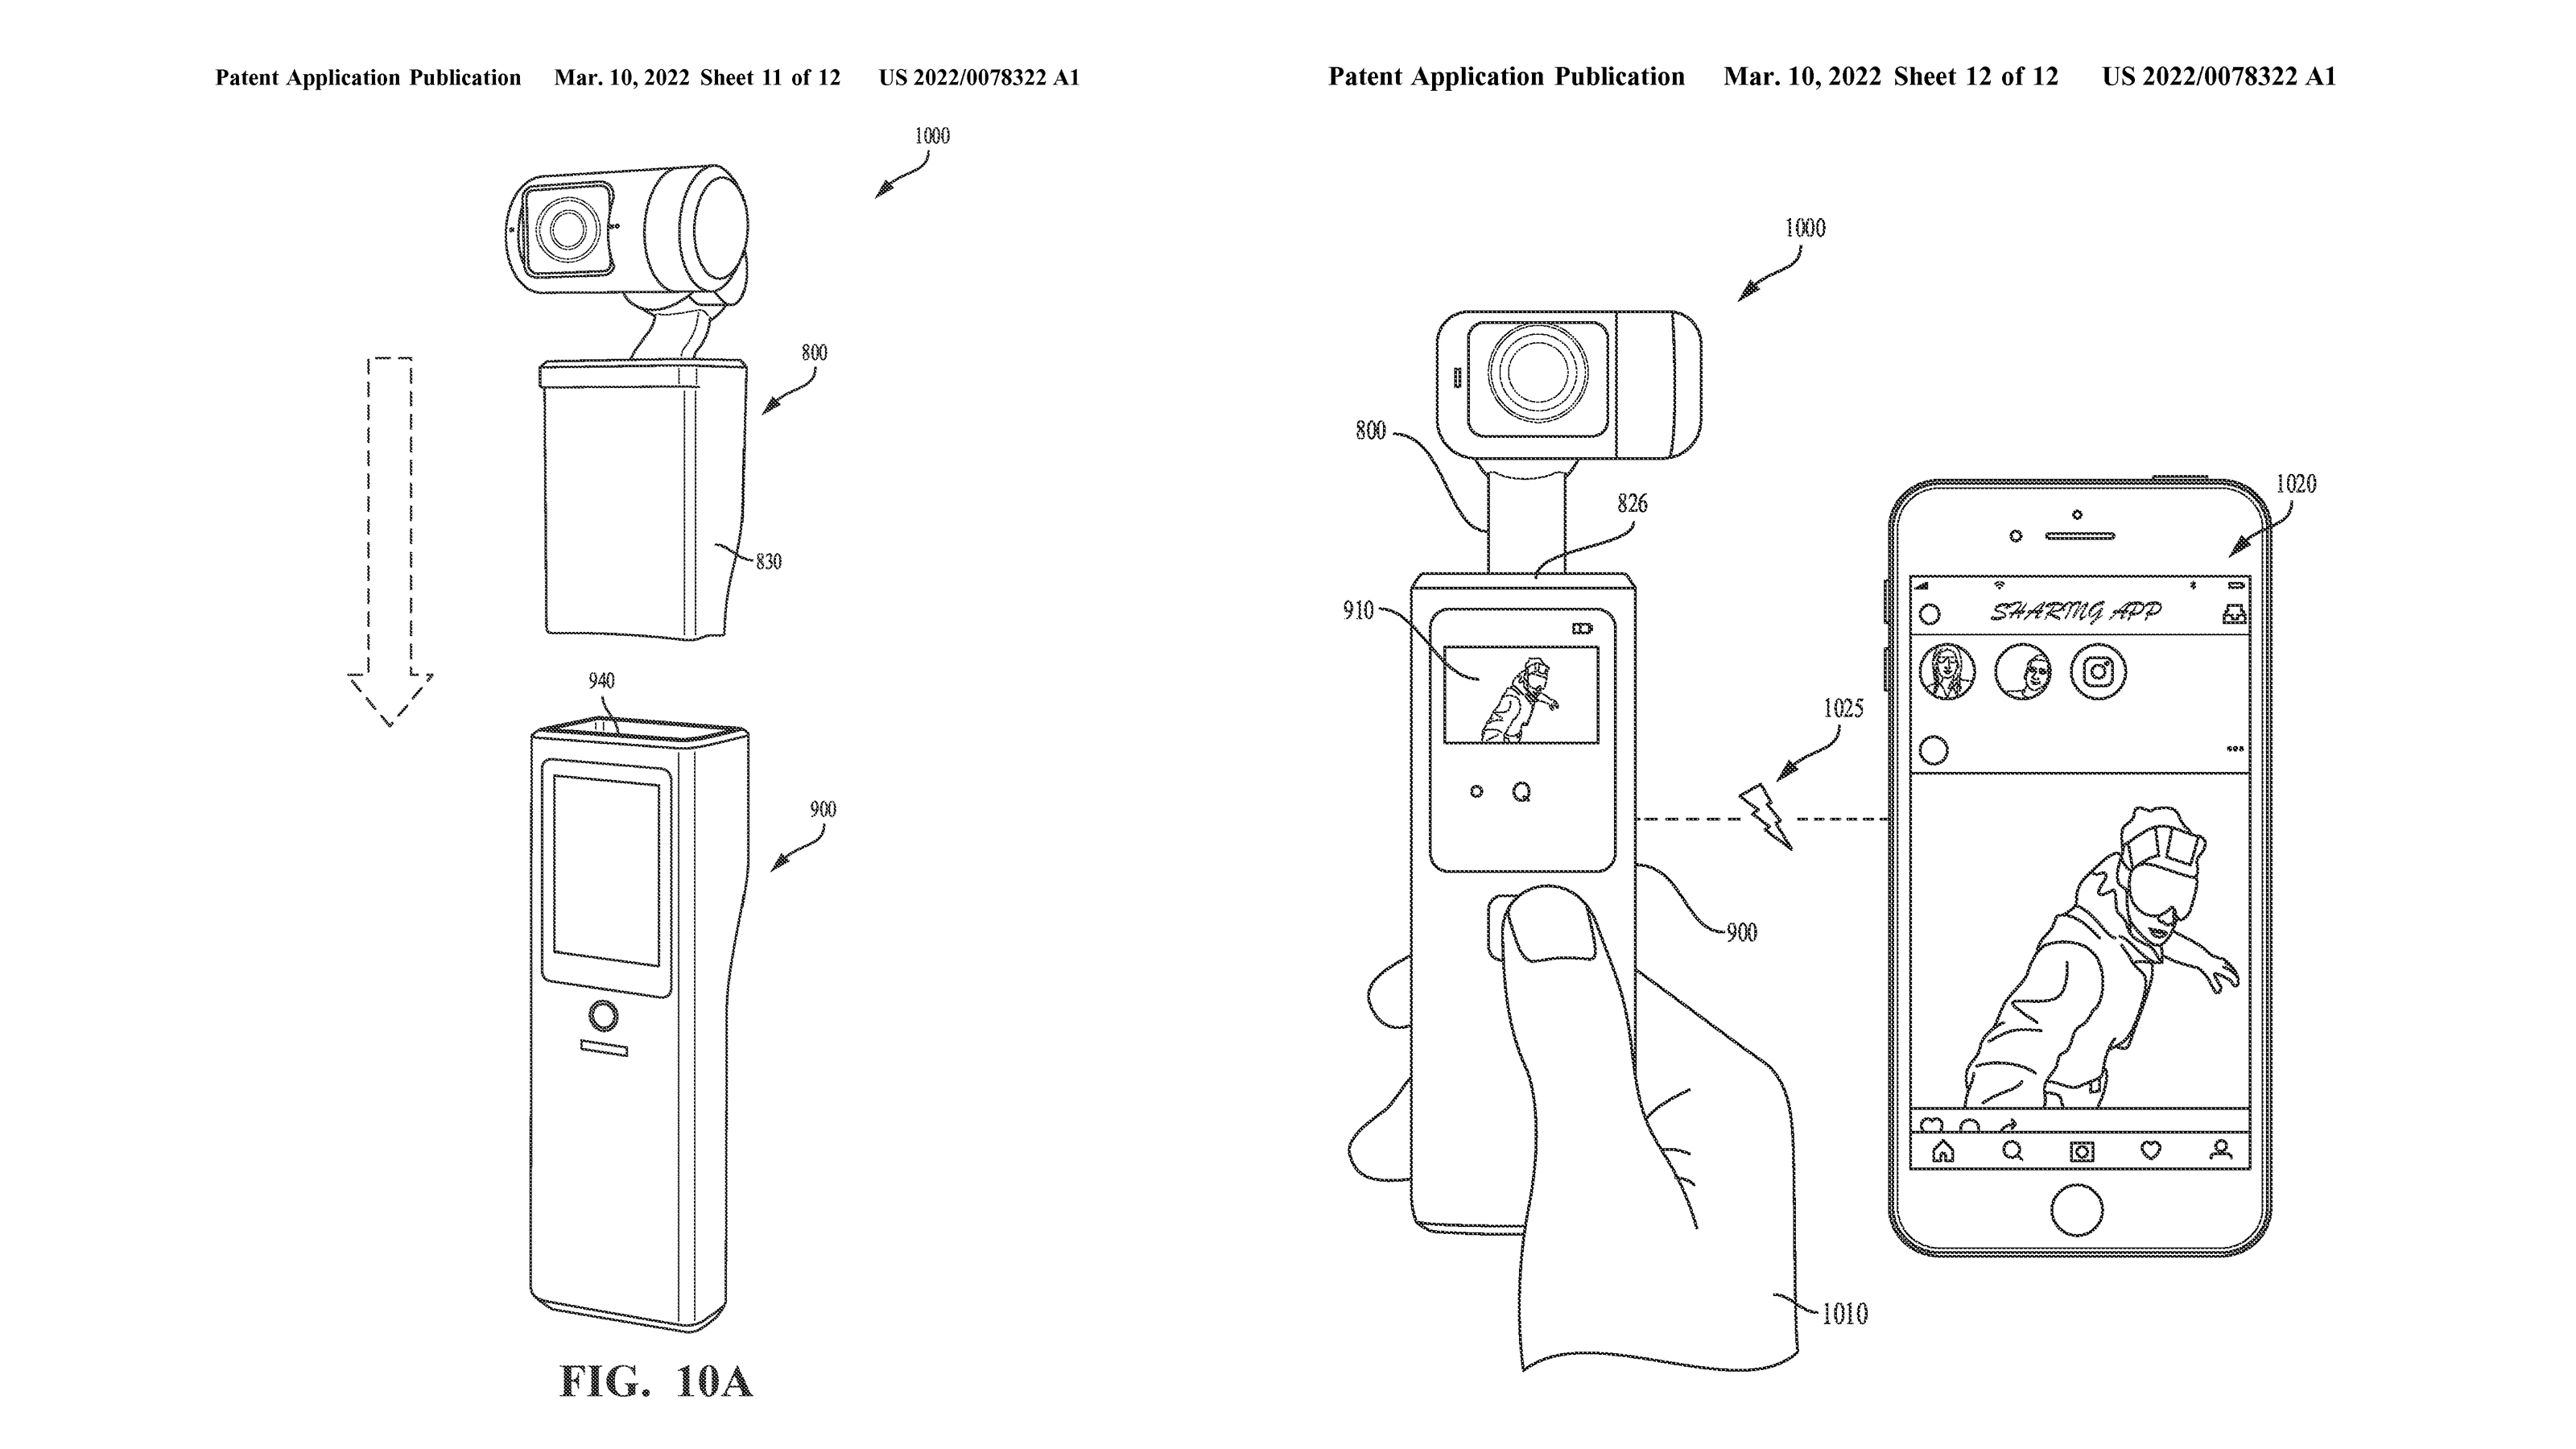 GoPro Patent Drawings